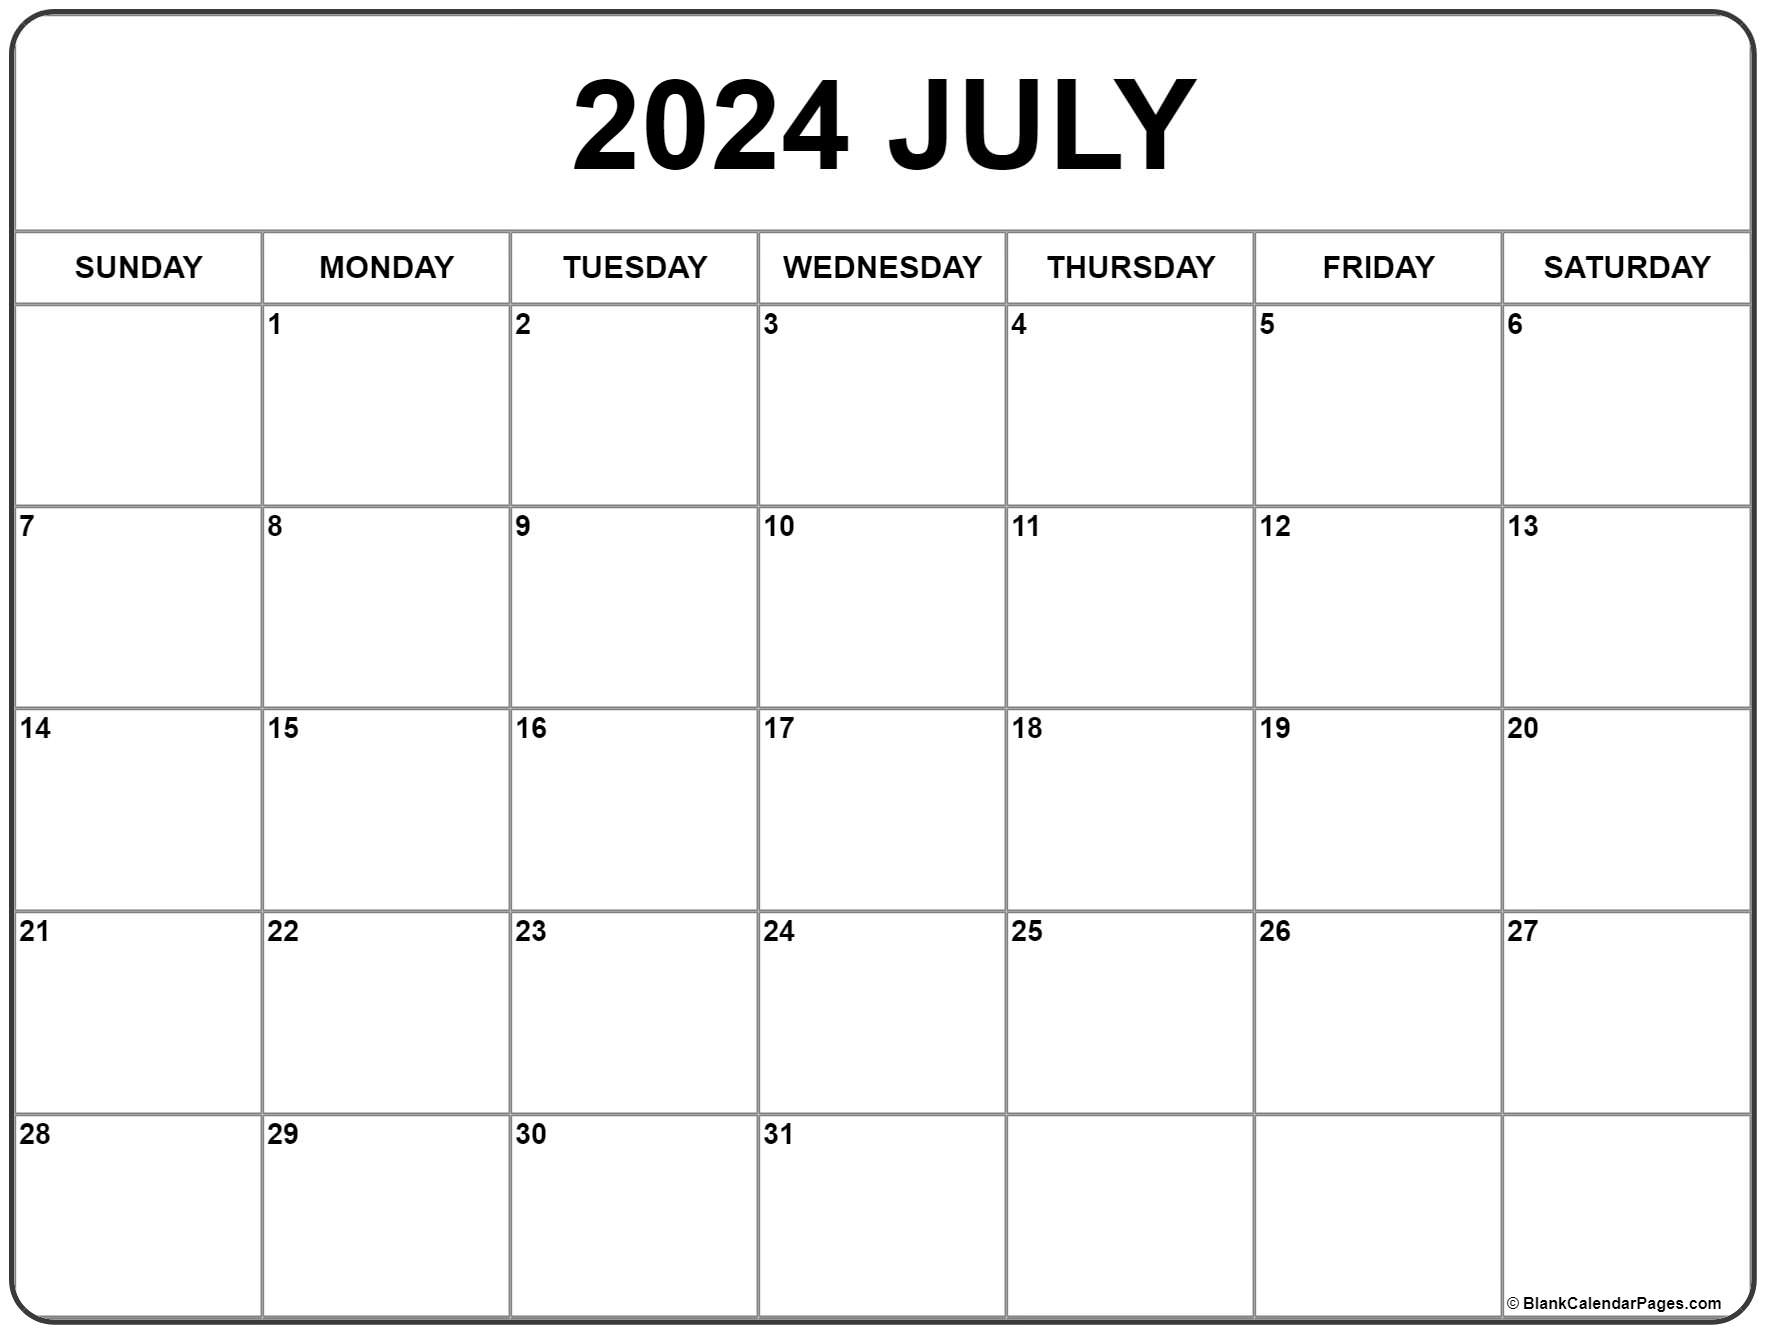 July 2024 Calendar | Free Printable Calendar with July 2024 Calendar Free Printable